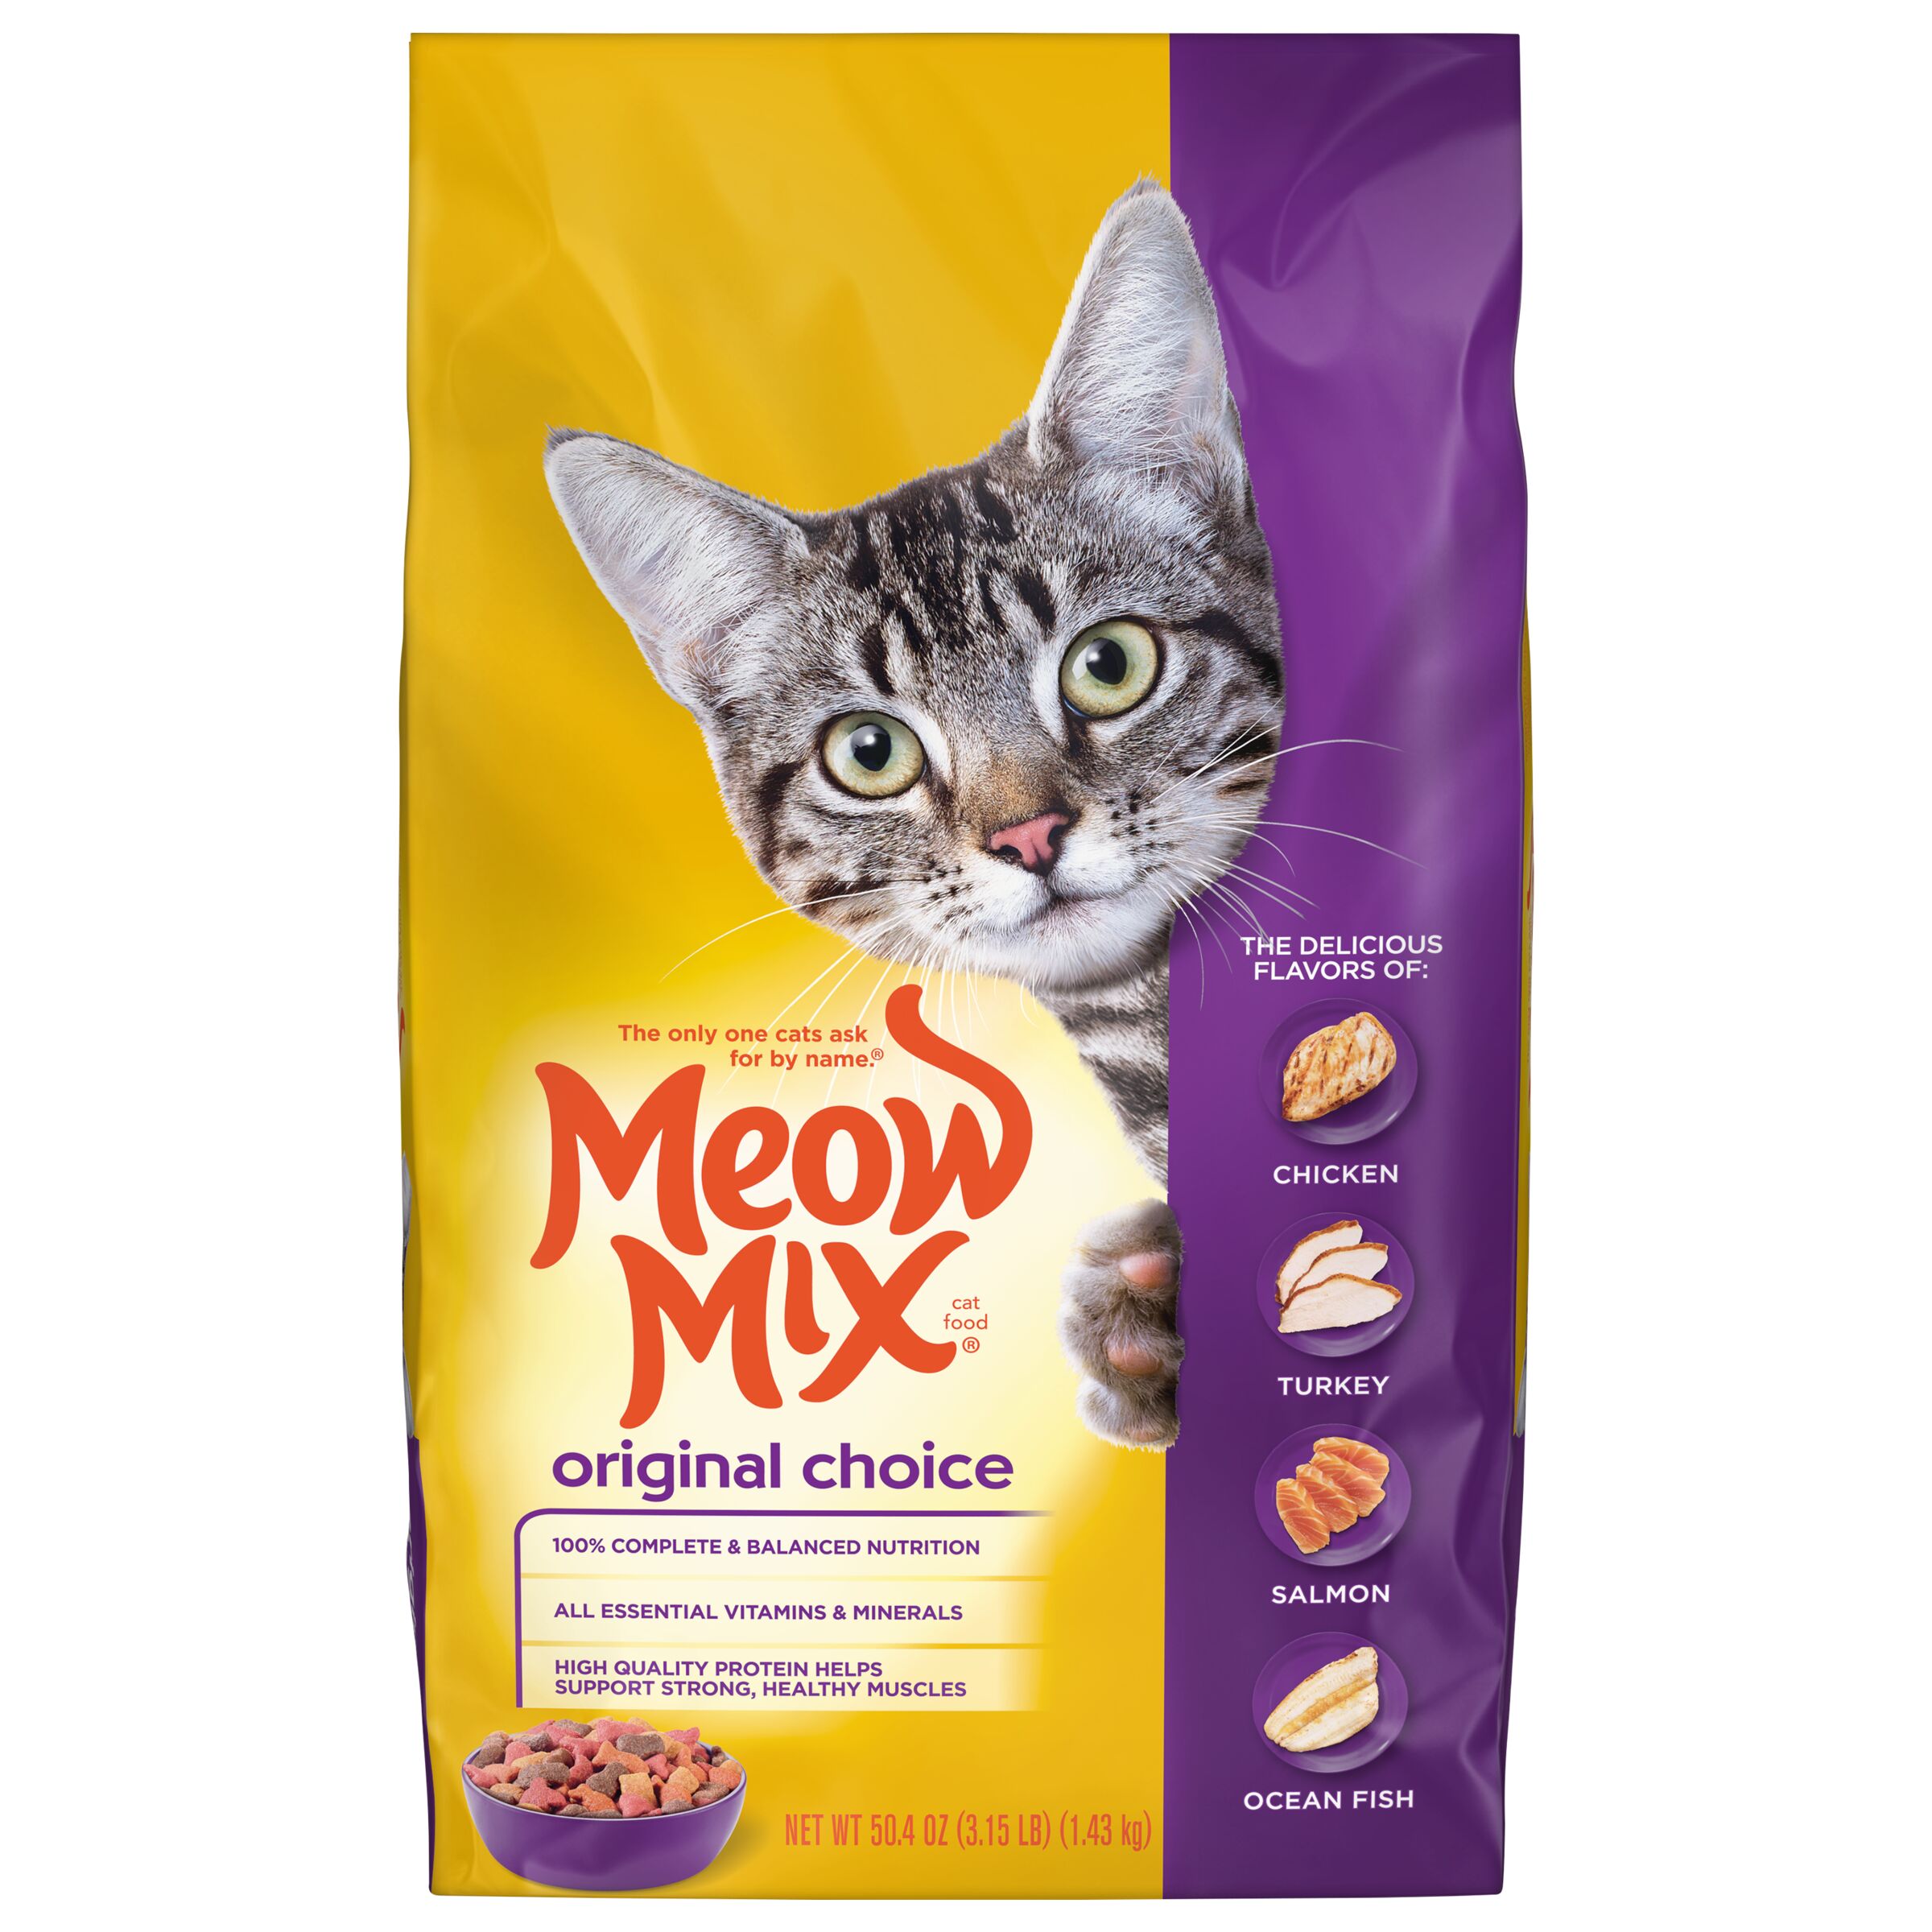 Meow Mix Original Choice Dry Cat Food, 3.15-Pound Bag - image 1 of 6